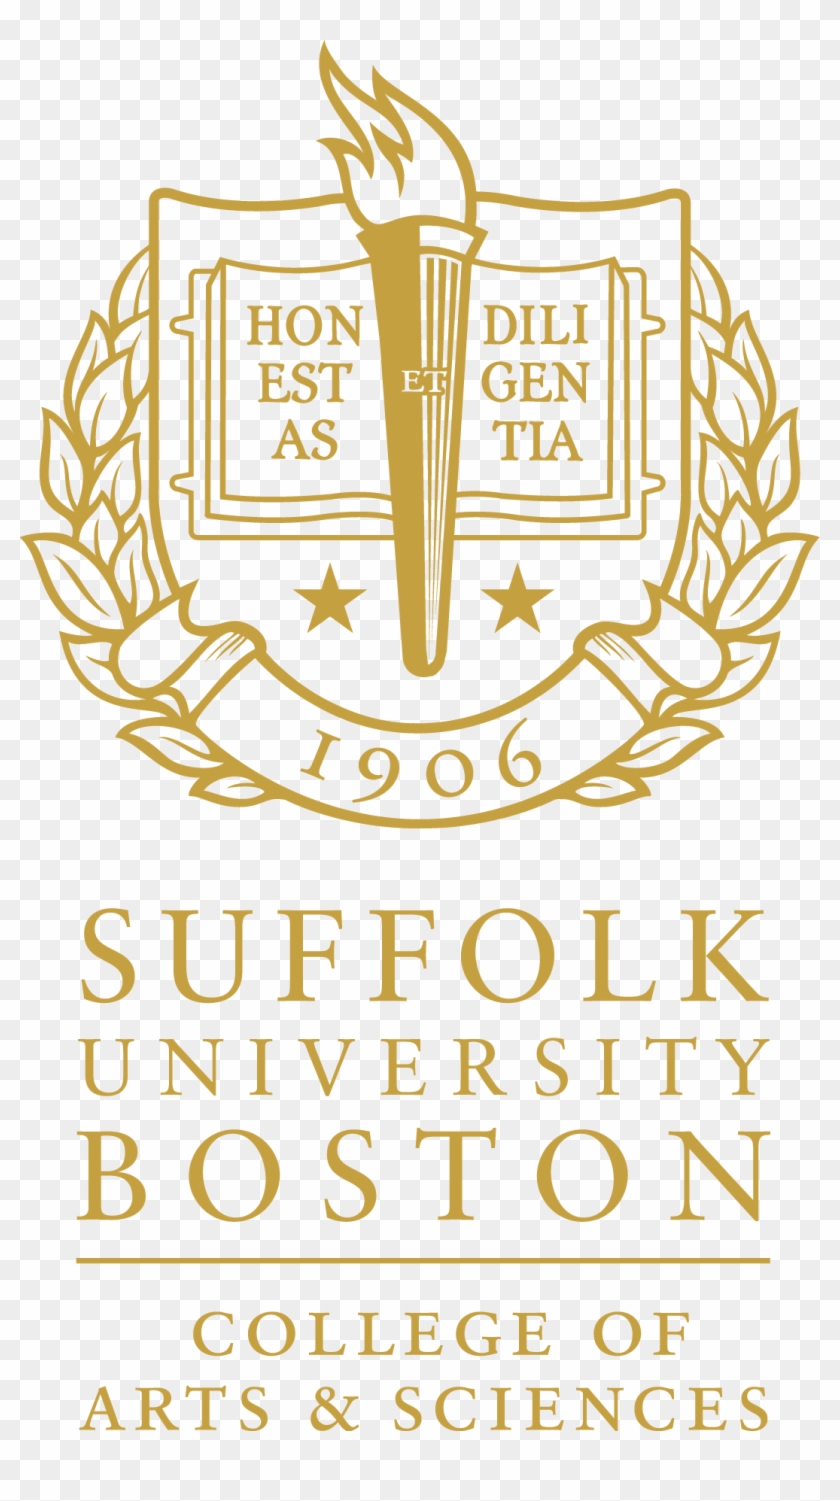 Suffolk University Boston College Of Arts & Sciences - Suffolk University Madrid Logo Clipart #1449757